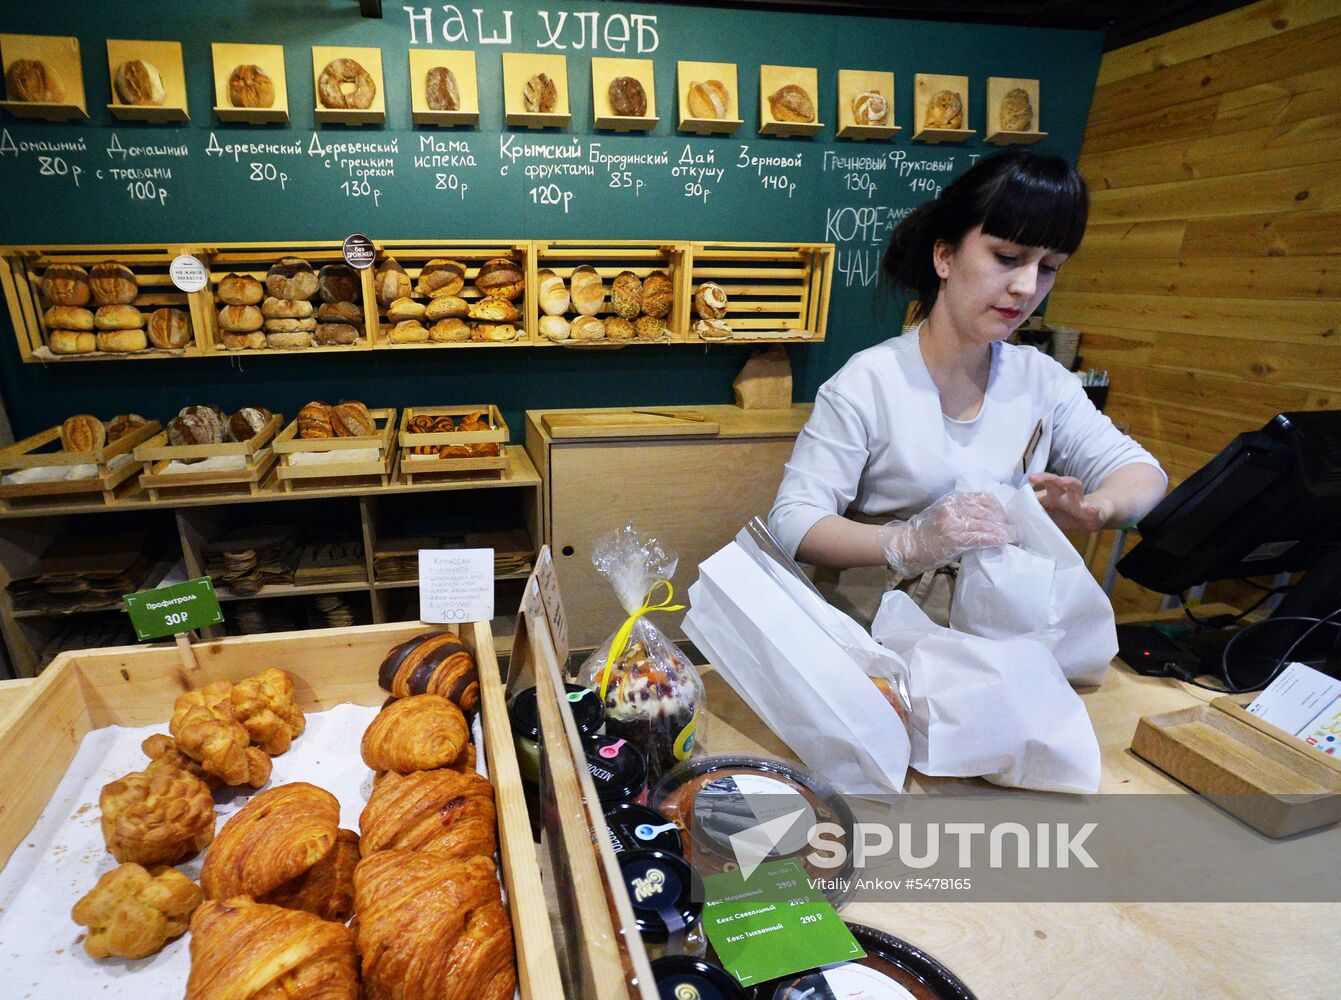 Khlebnoye Delo bakery in Vladivostok